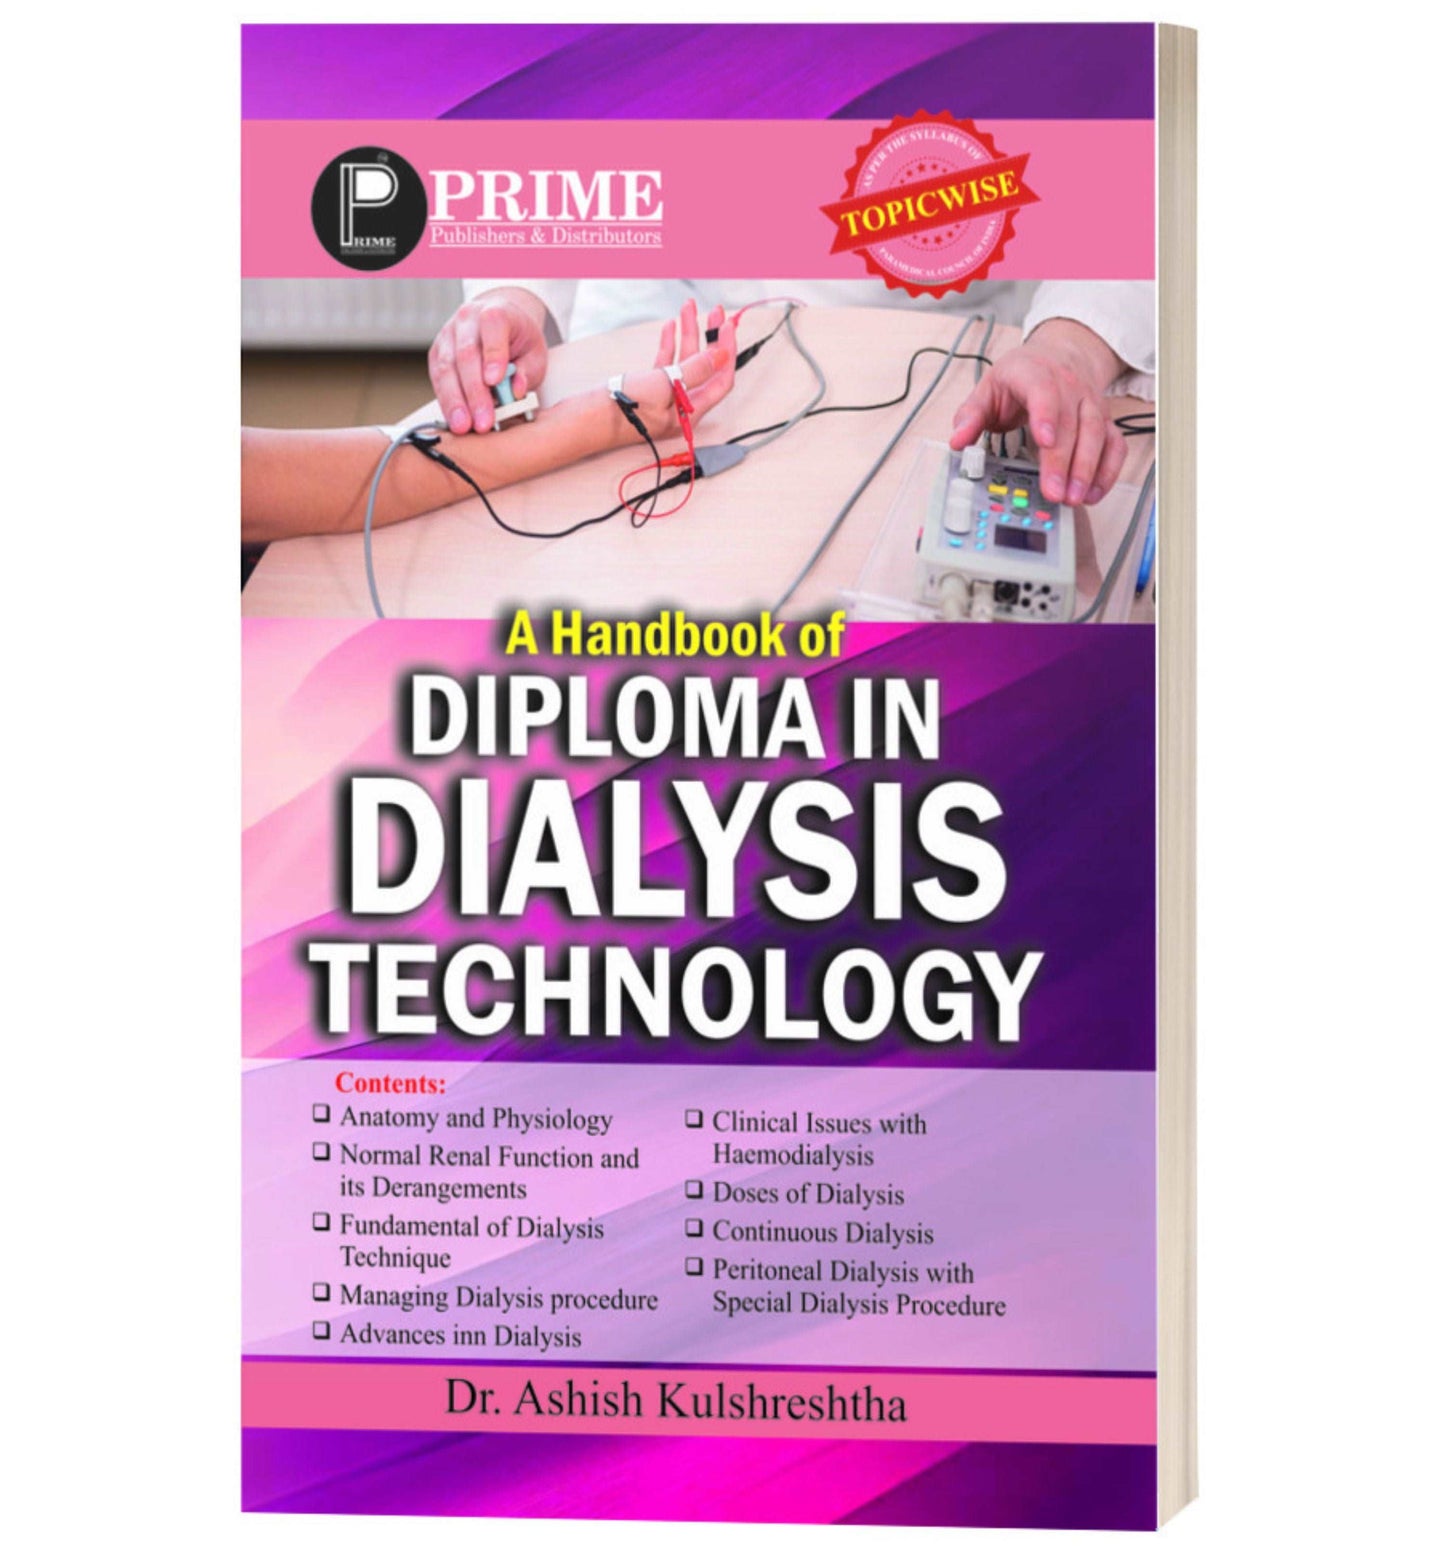 A handbook of Diploma in Dialysis Technology